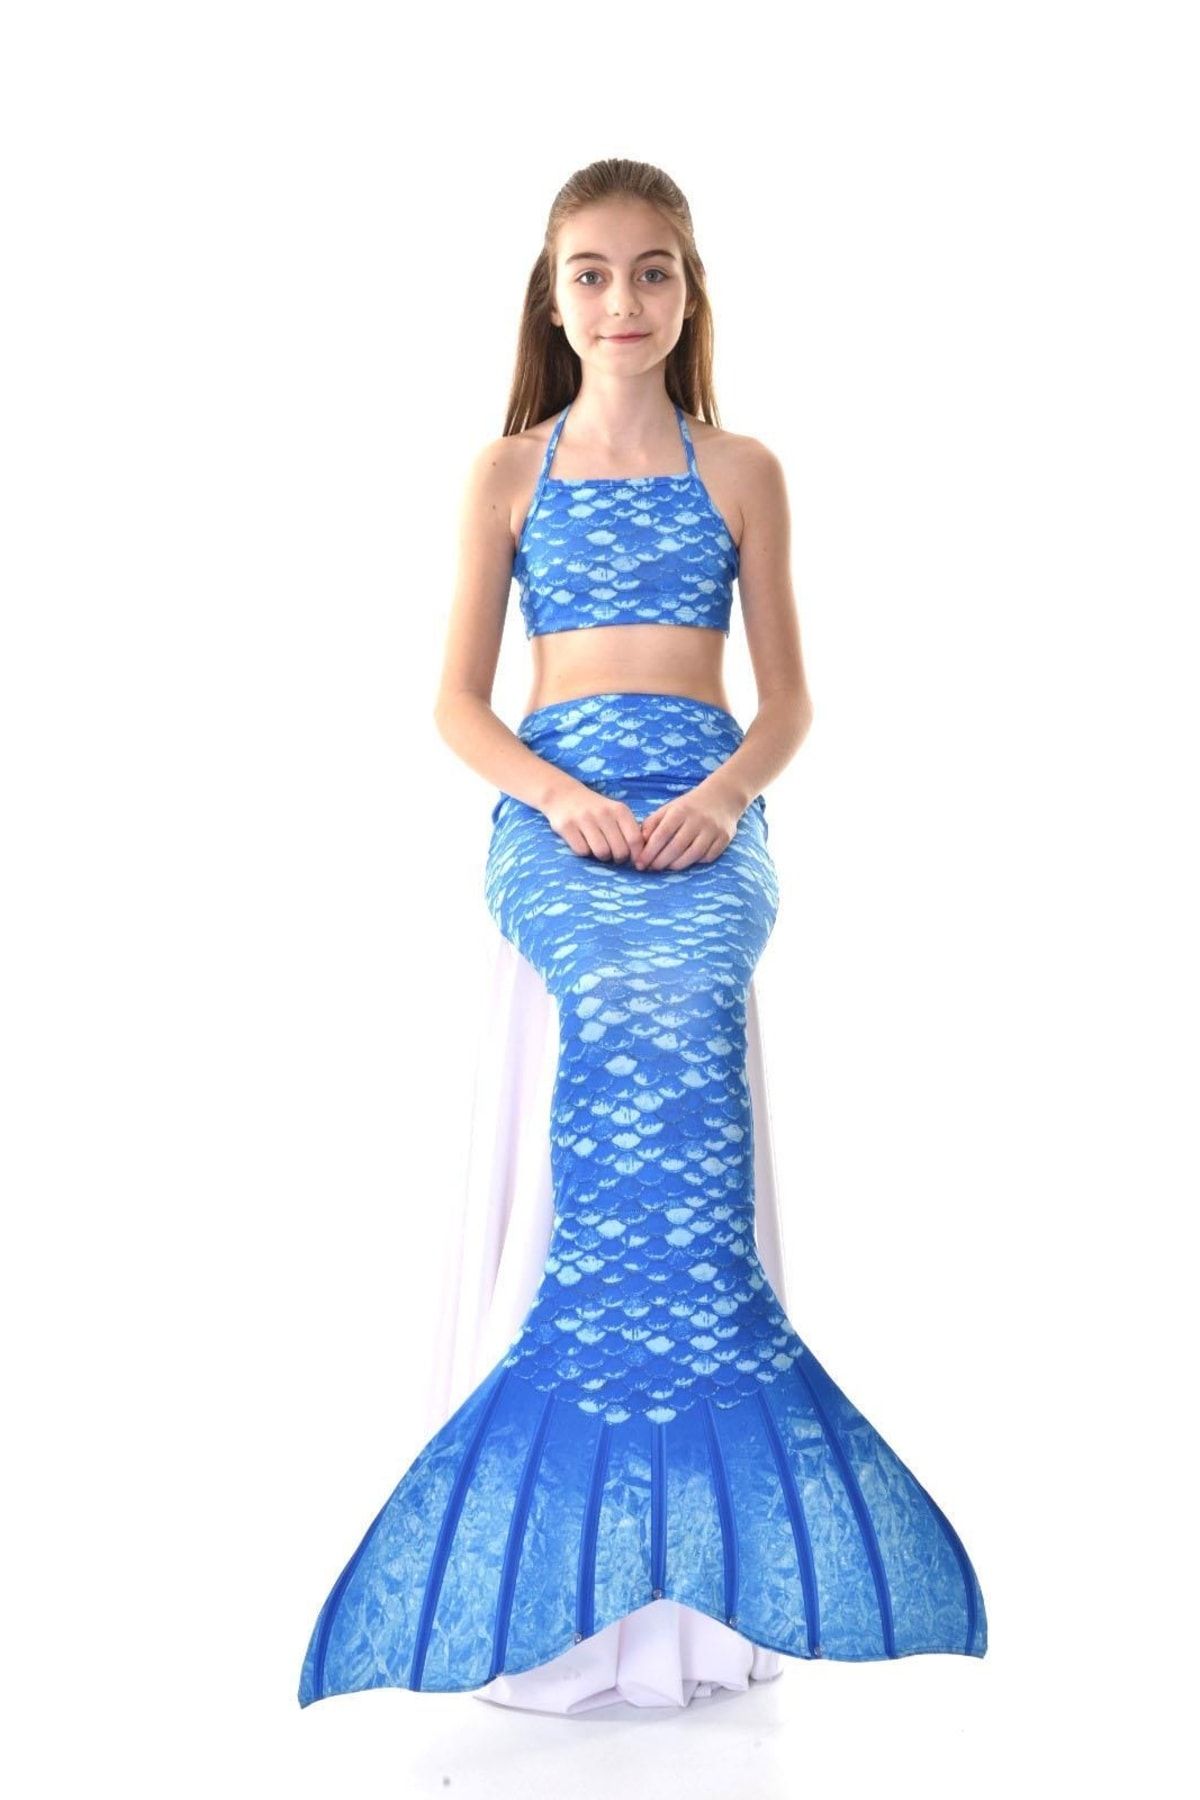 Rs Ramuni Deniz Kızı Model Kostüm Ve Mayo / Üçlü Set